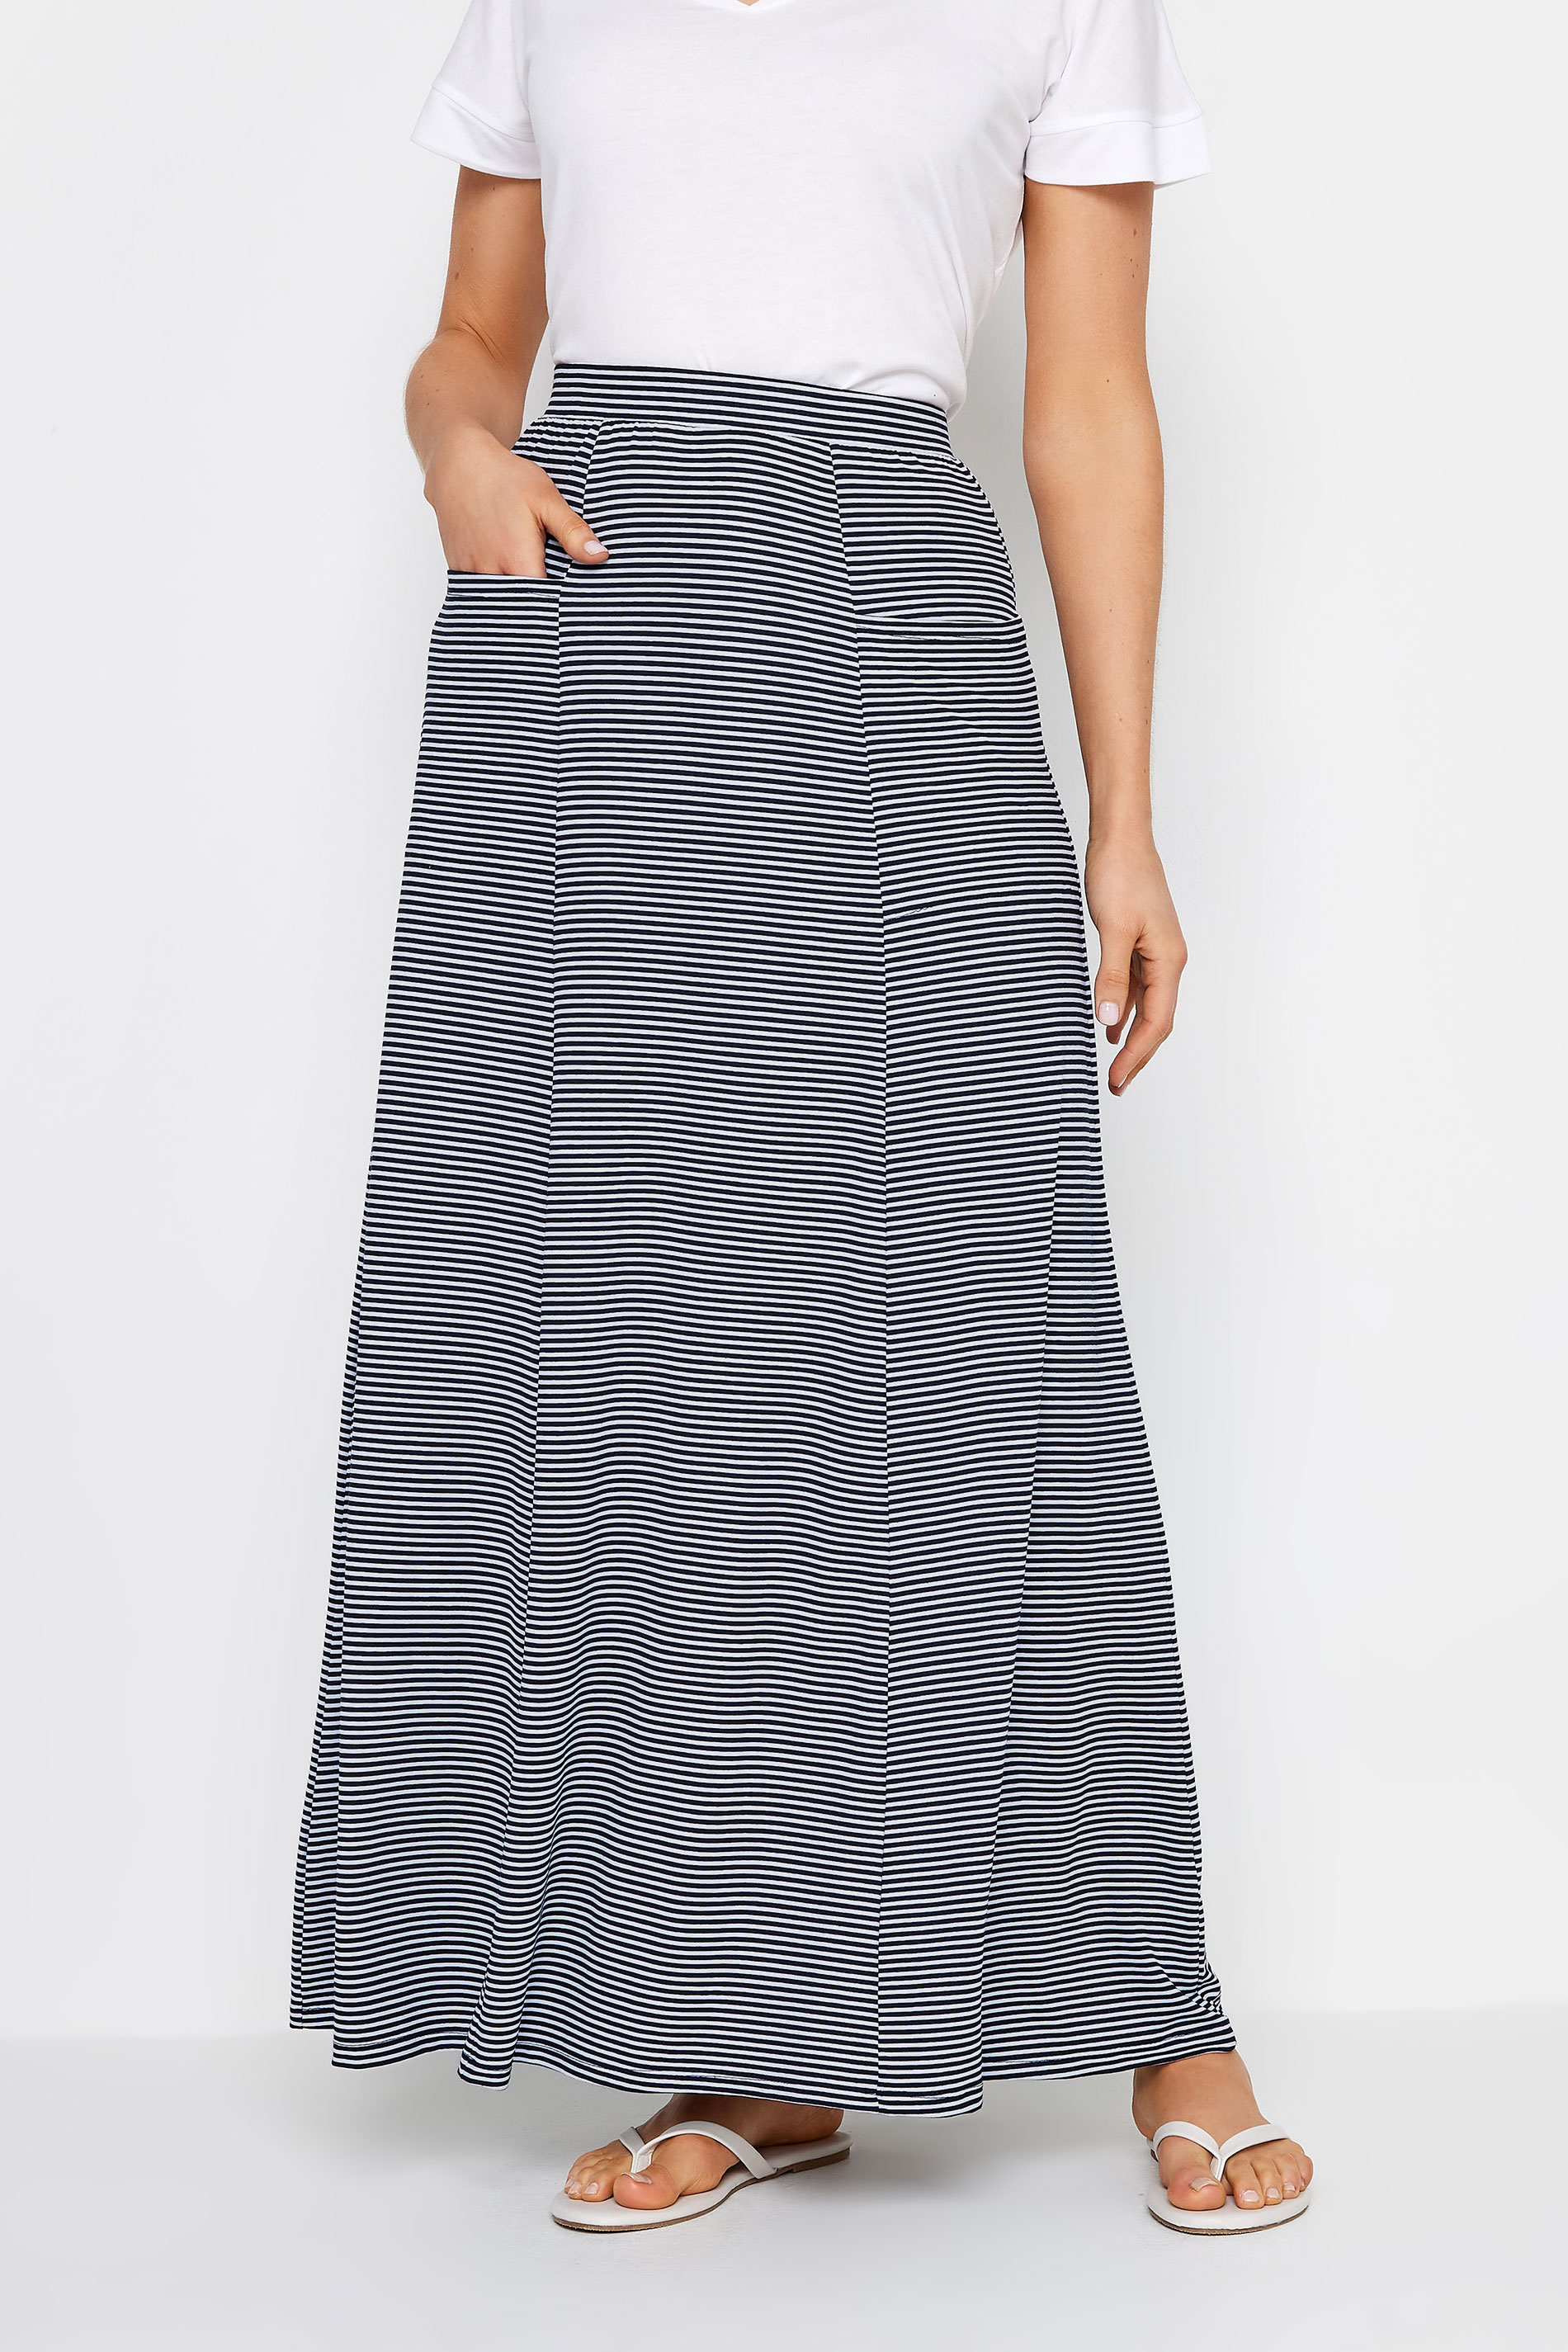 LTS Tall Womens Navy Blue Stripe Fit & Flare Maxi Skirt | Long Tall Sally 2